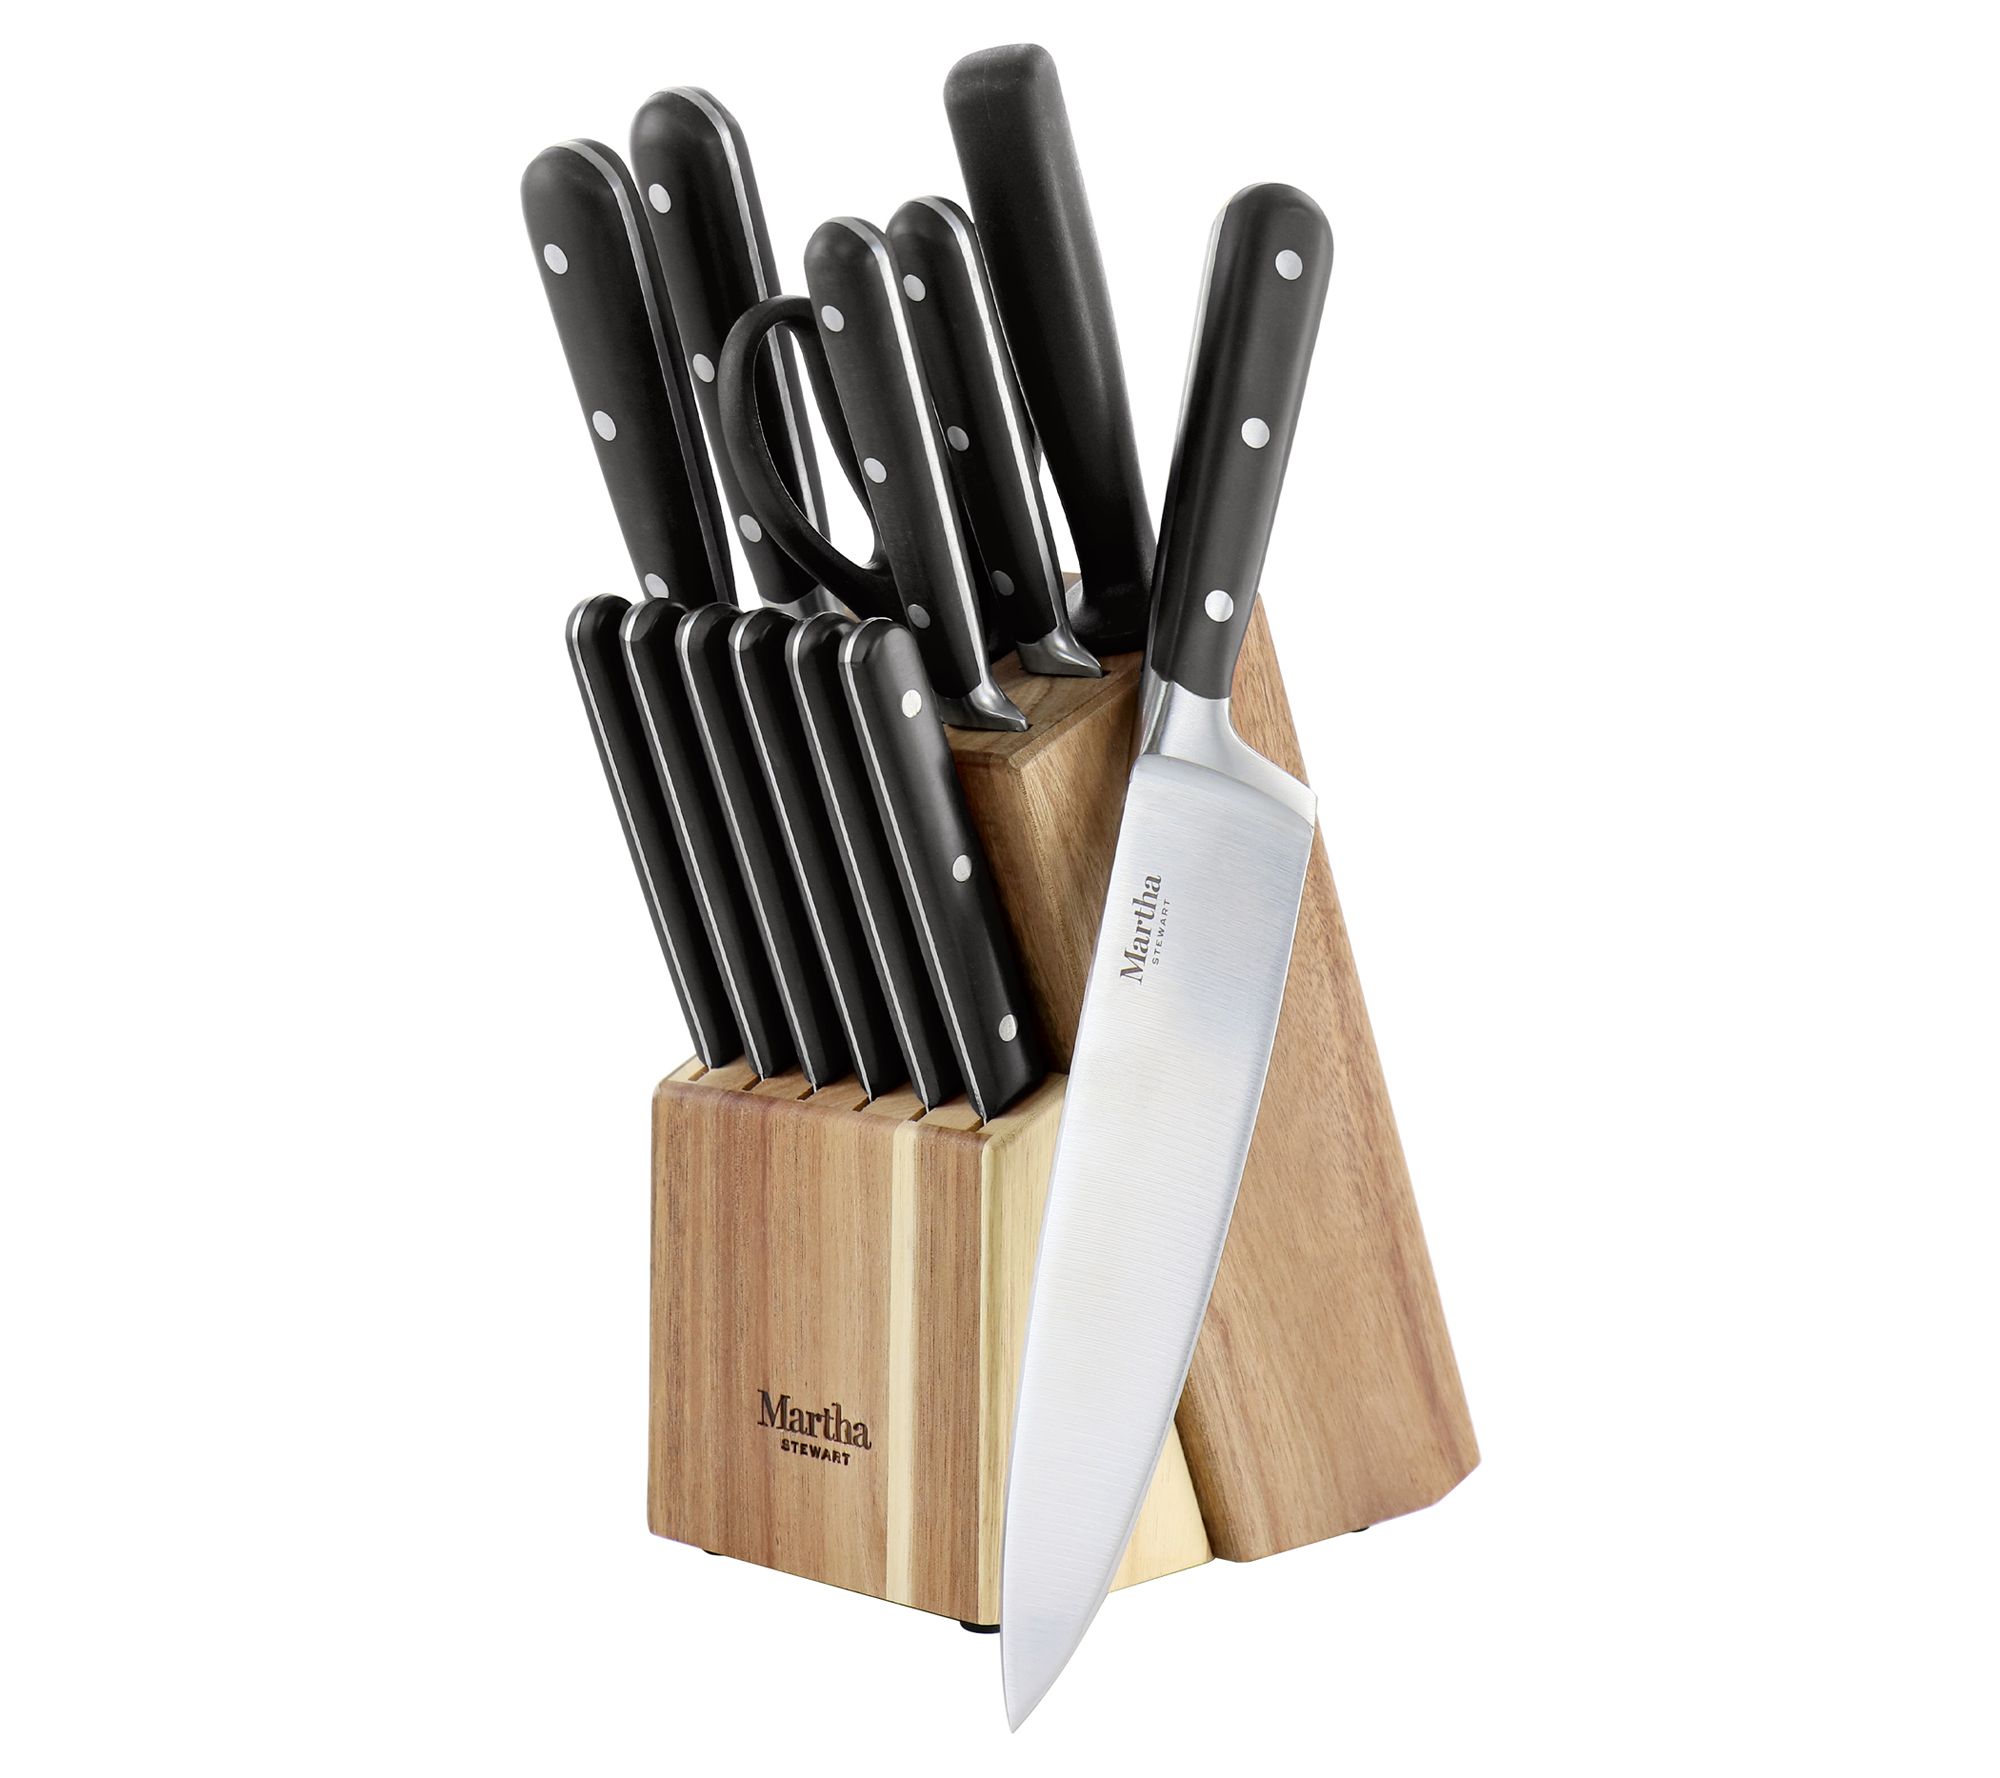 Cuisinart 14-pc Knife Set with 6 Bread Knife &Block - Walnut